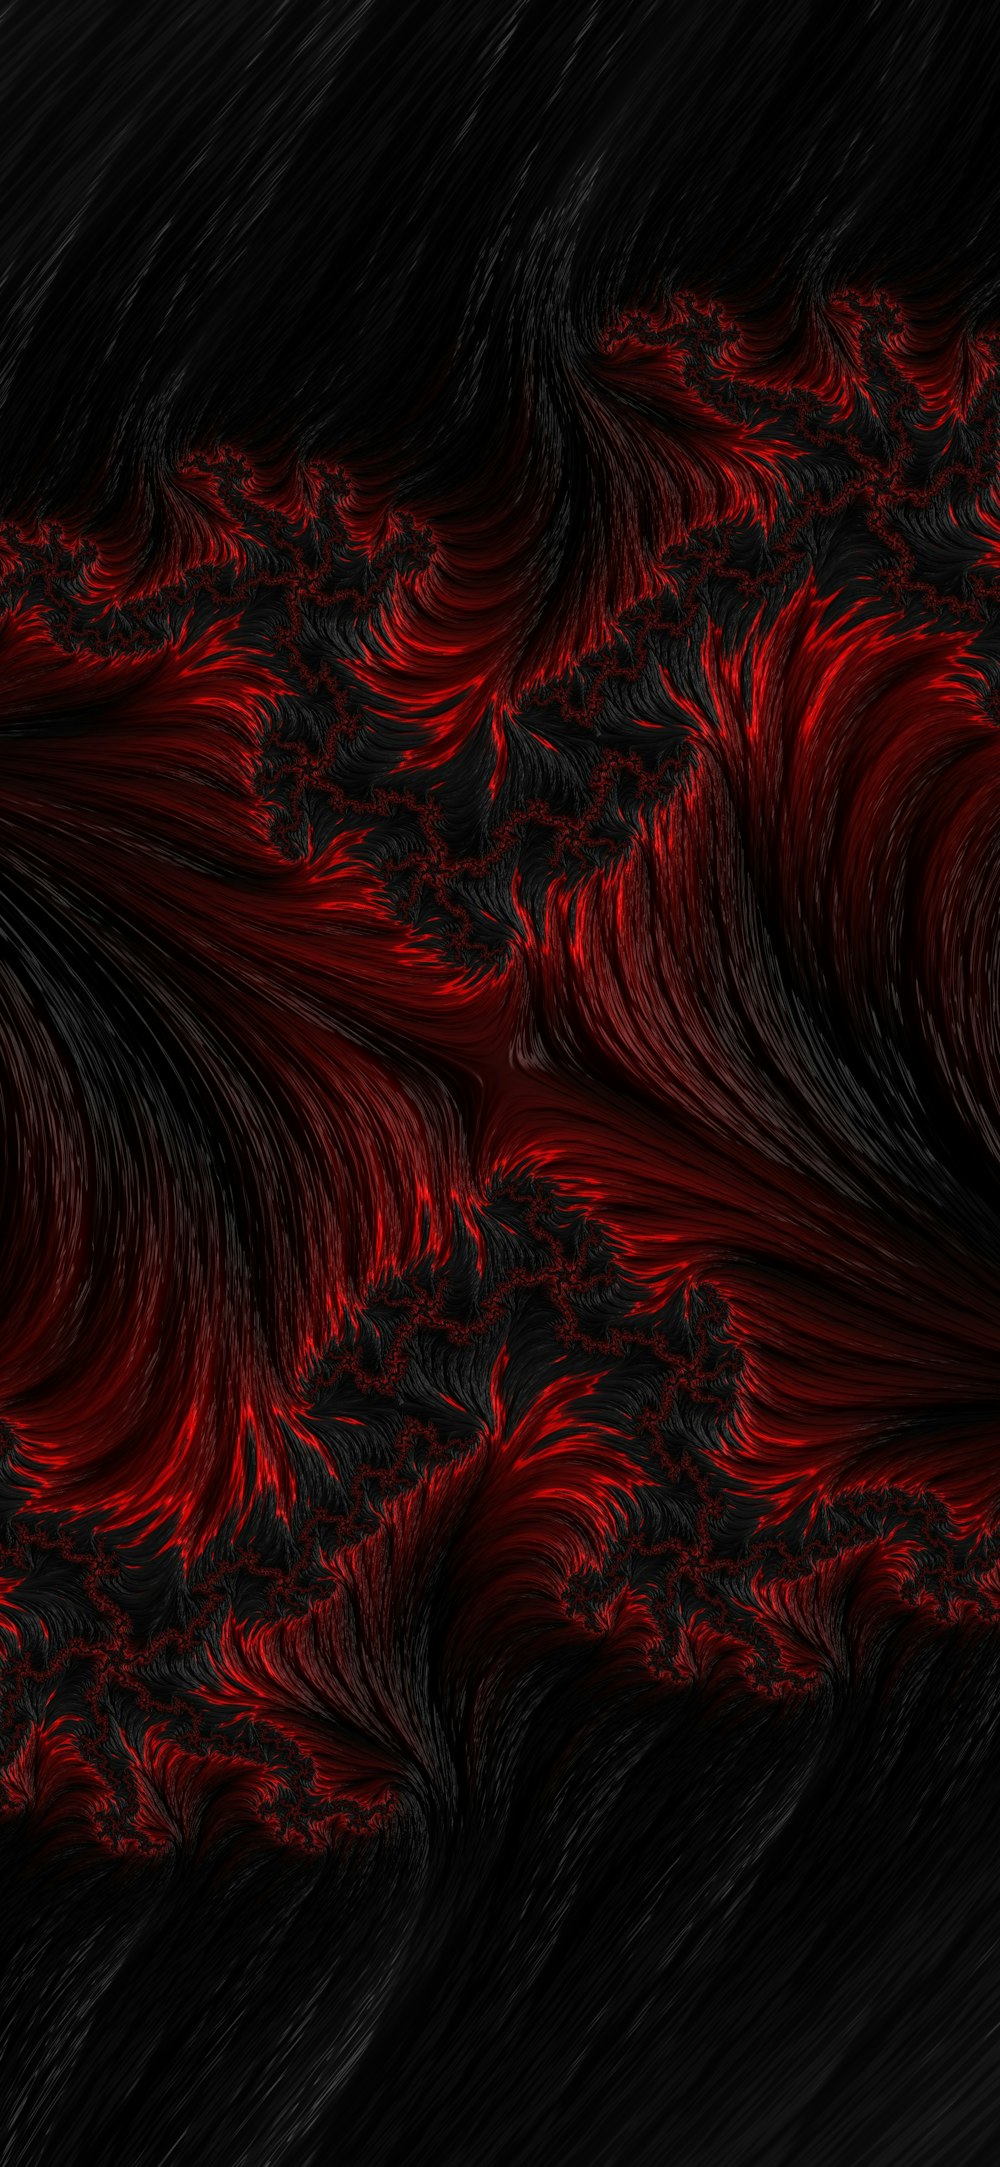 Red And Black Artwork Photo – Free Texture Image On Unsplash